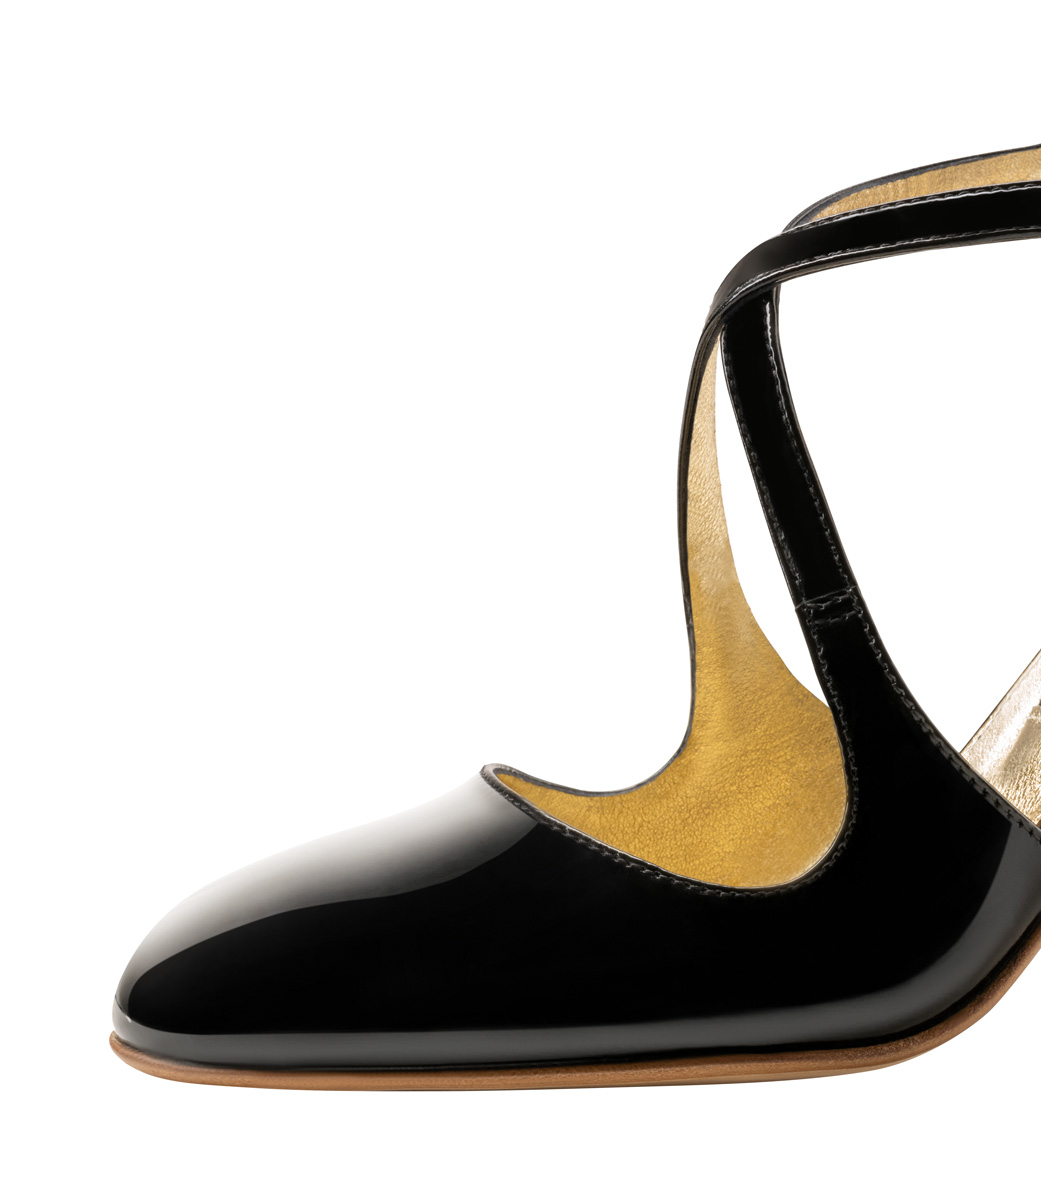 Detailed view of the Nueva Epoca ladies' dance shoe in black patent